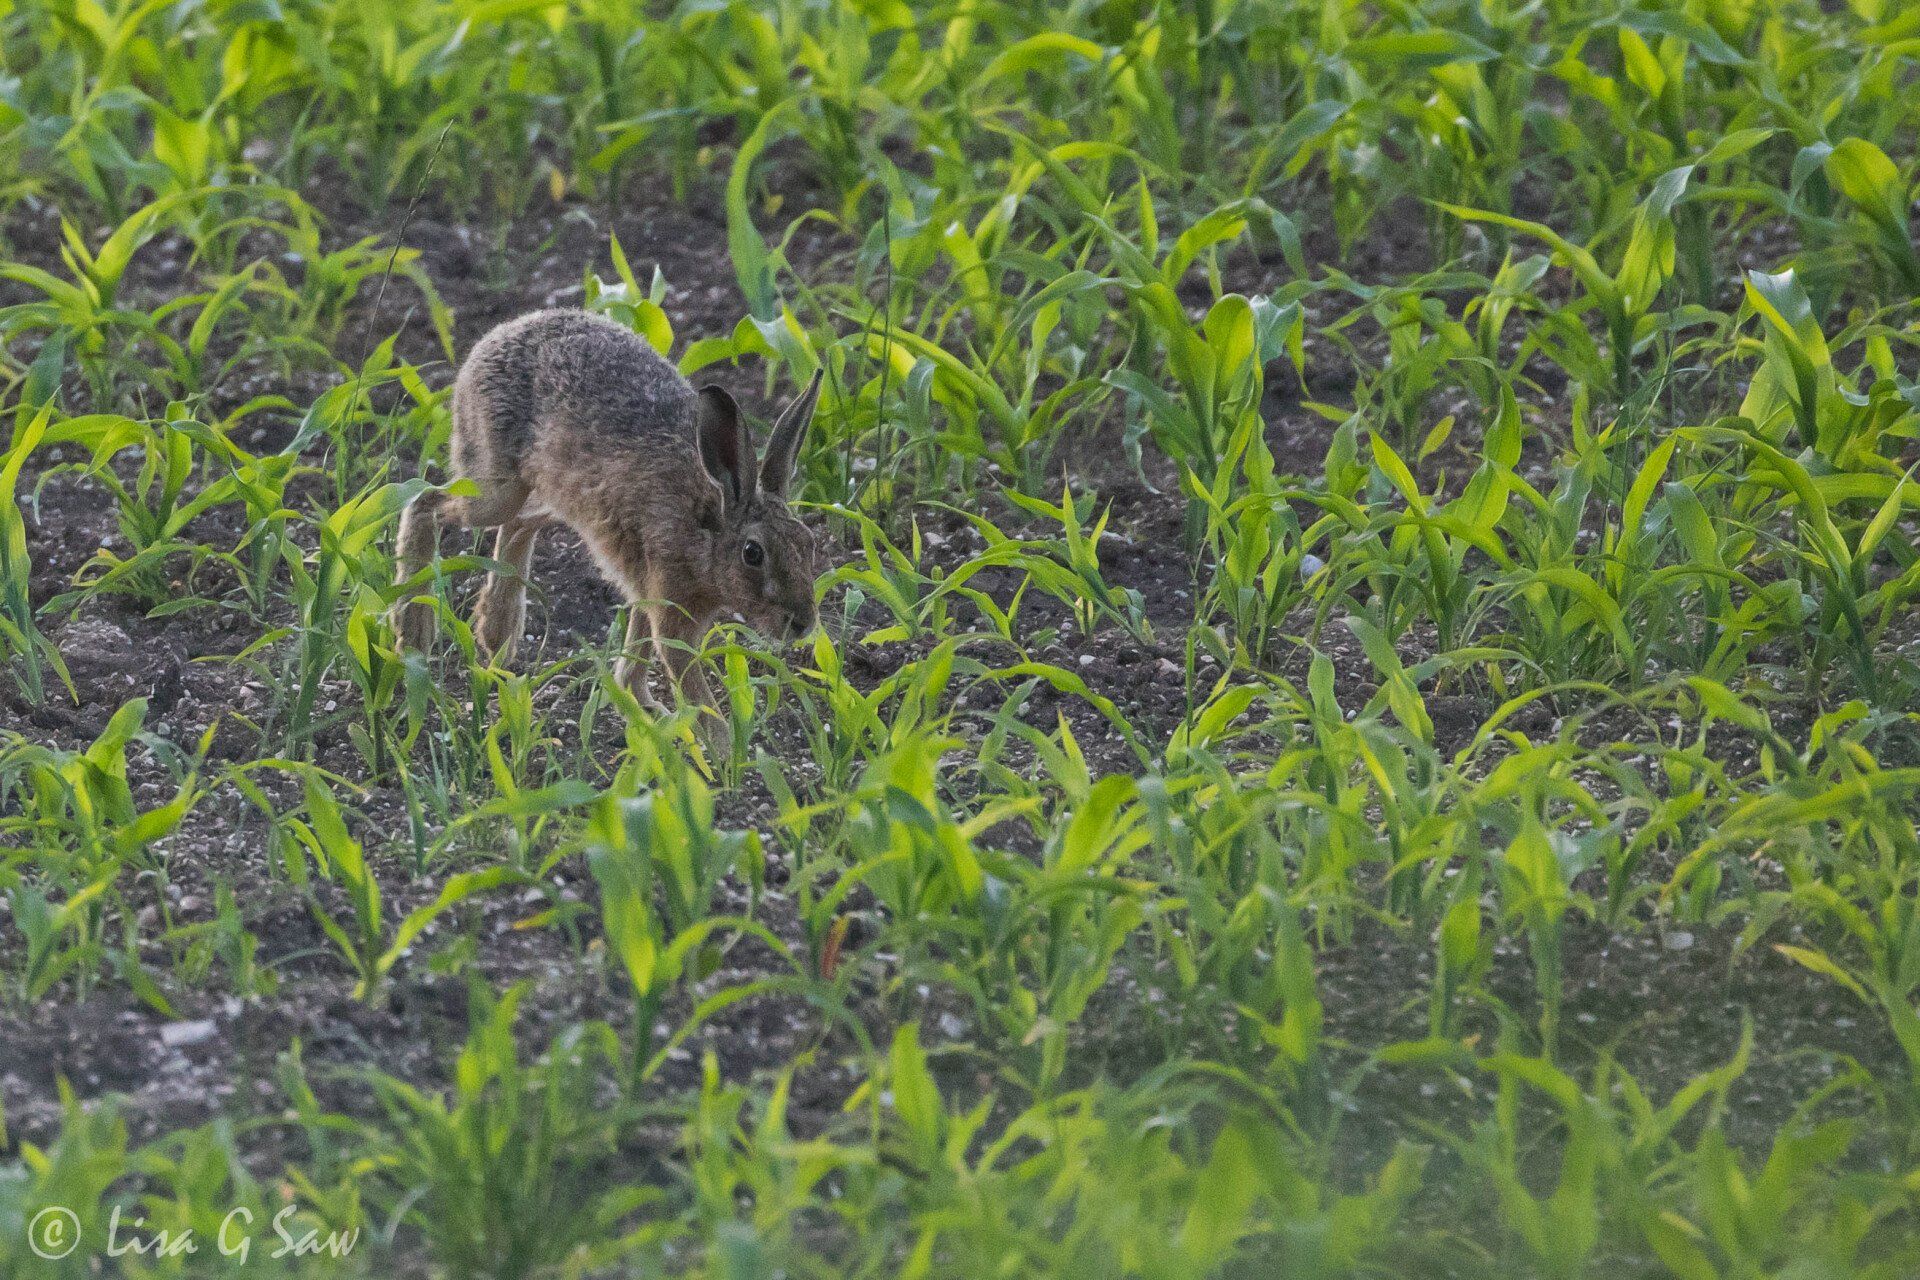 Hare hopping through a field